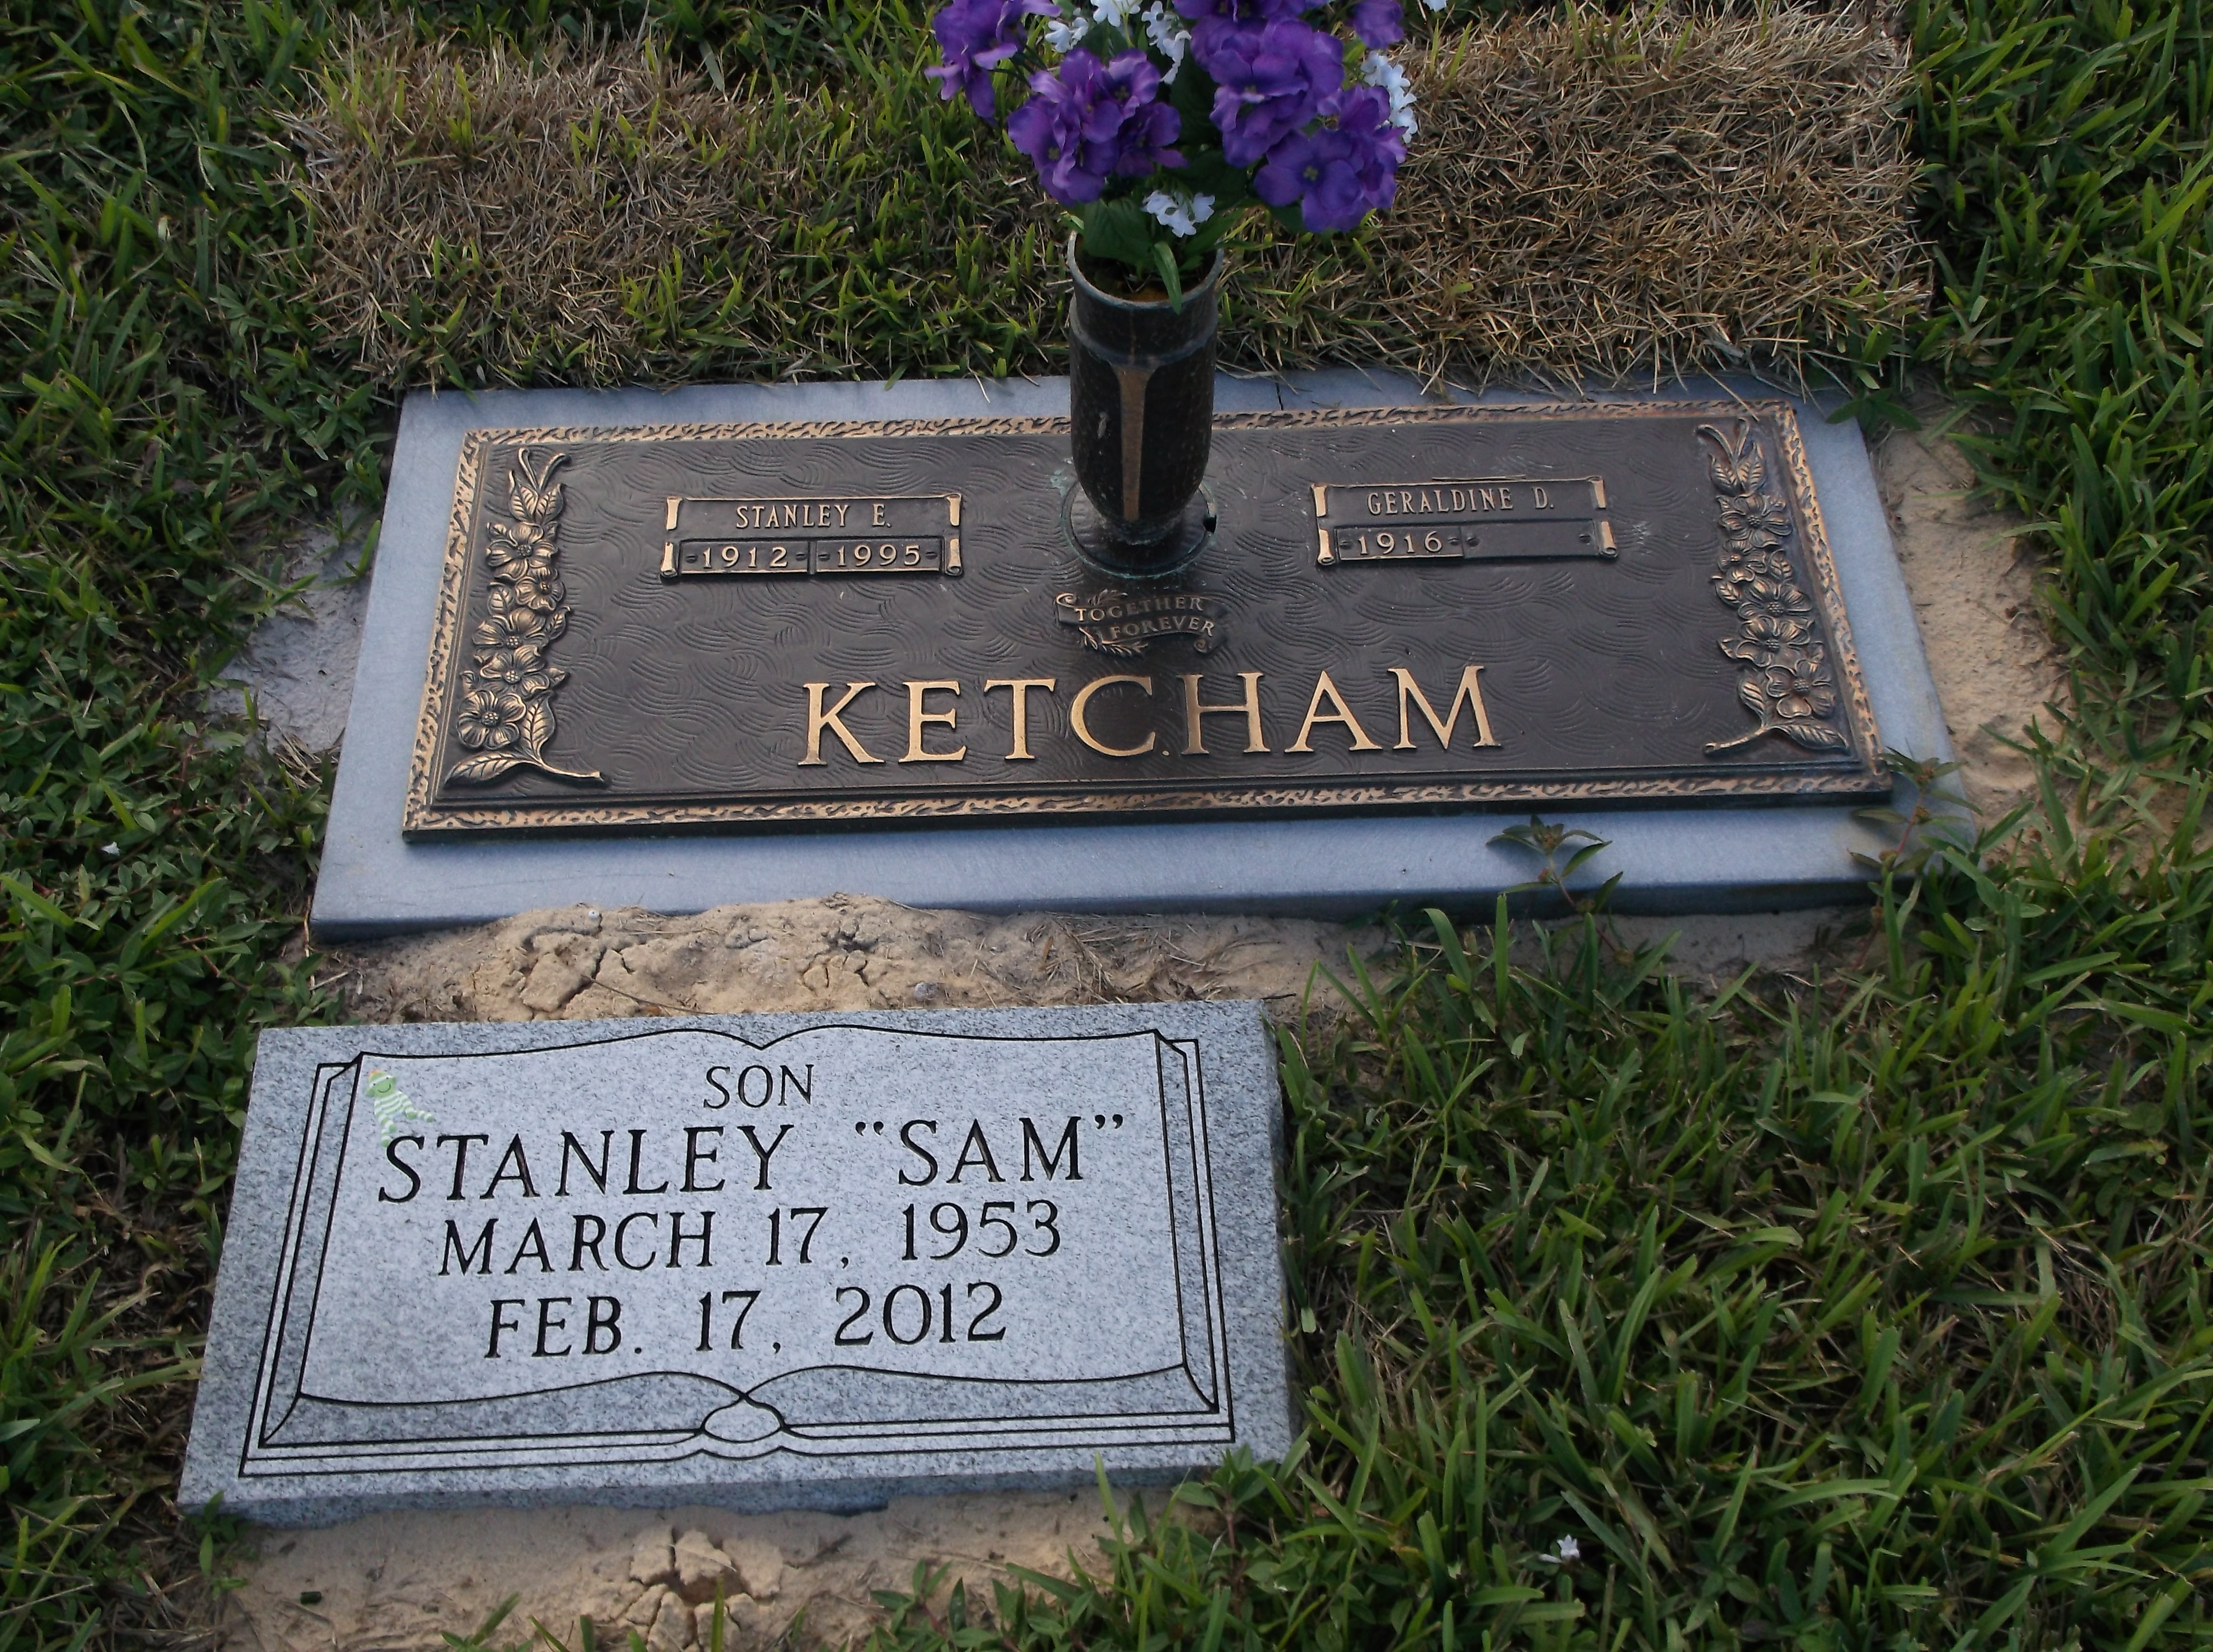 Stanley "Sam" Ketcham